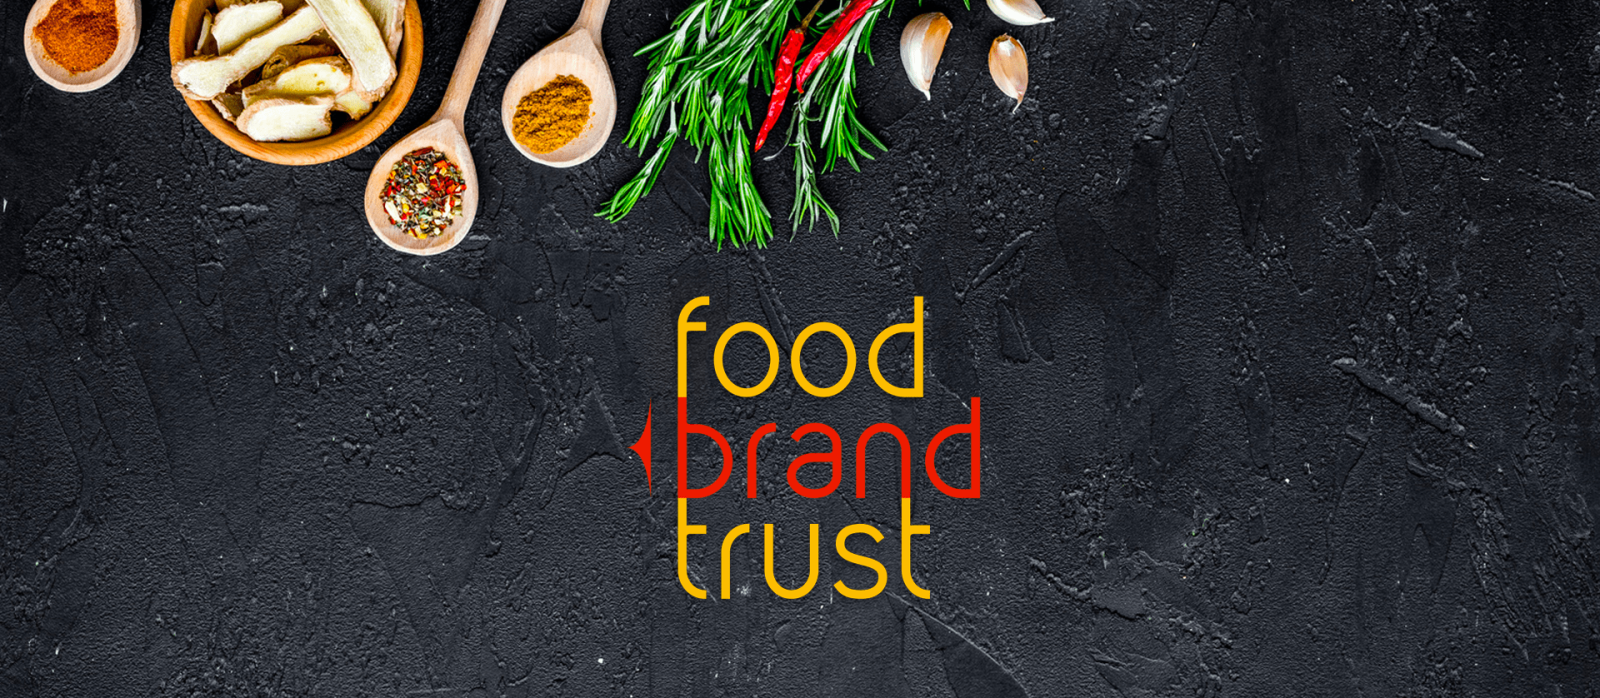 Header FoodBrandtrust - Alliance régie